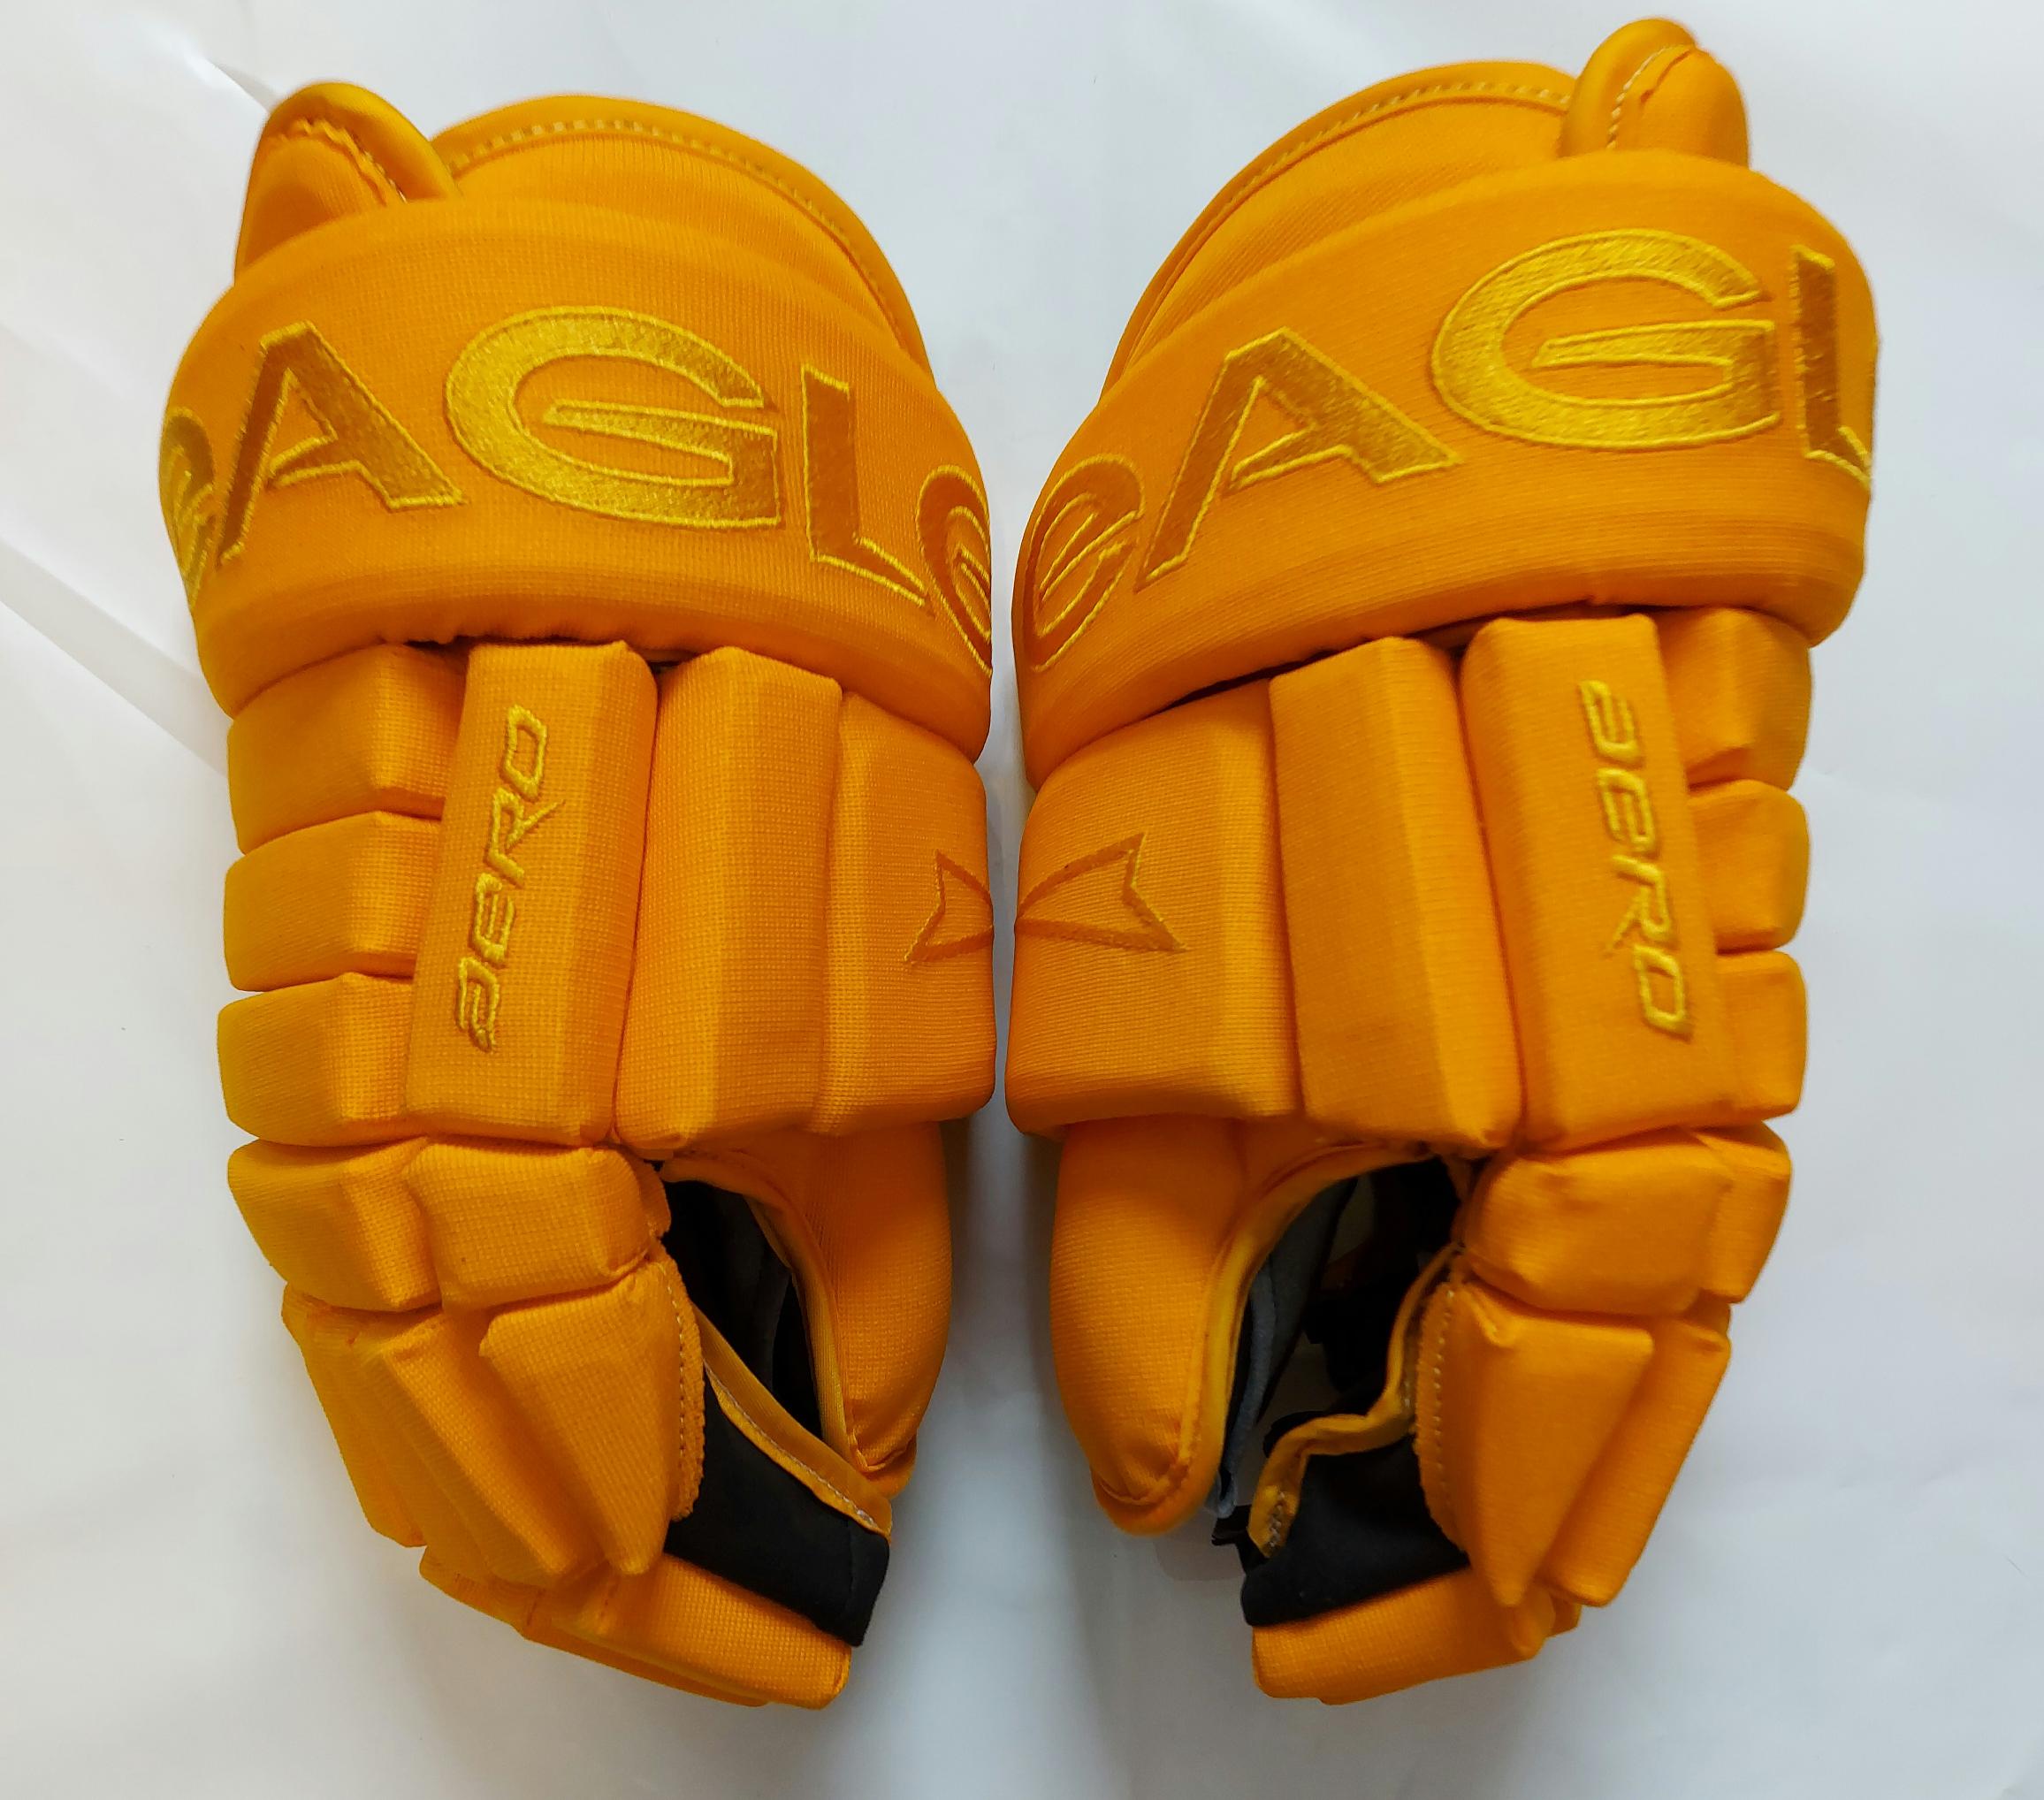 Aero Pro Shoulder Pads - Eagle Hockey